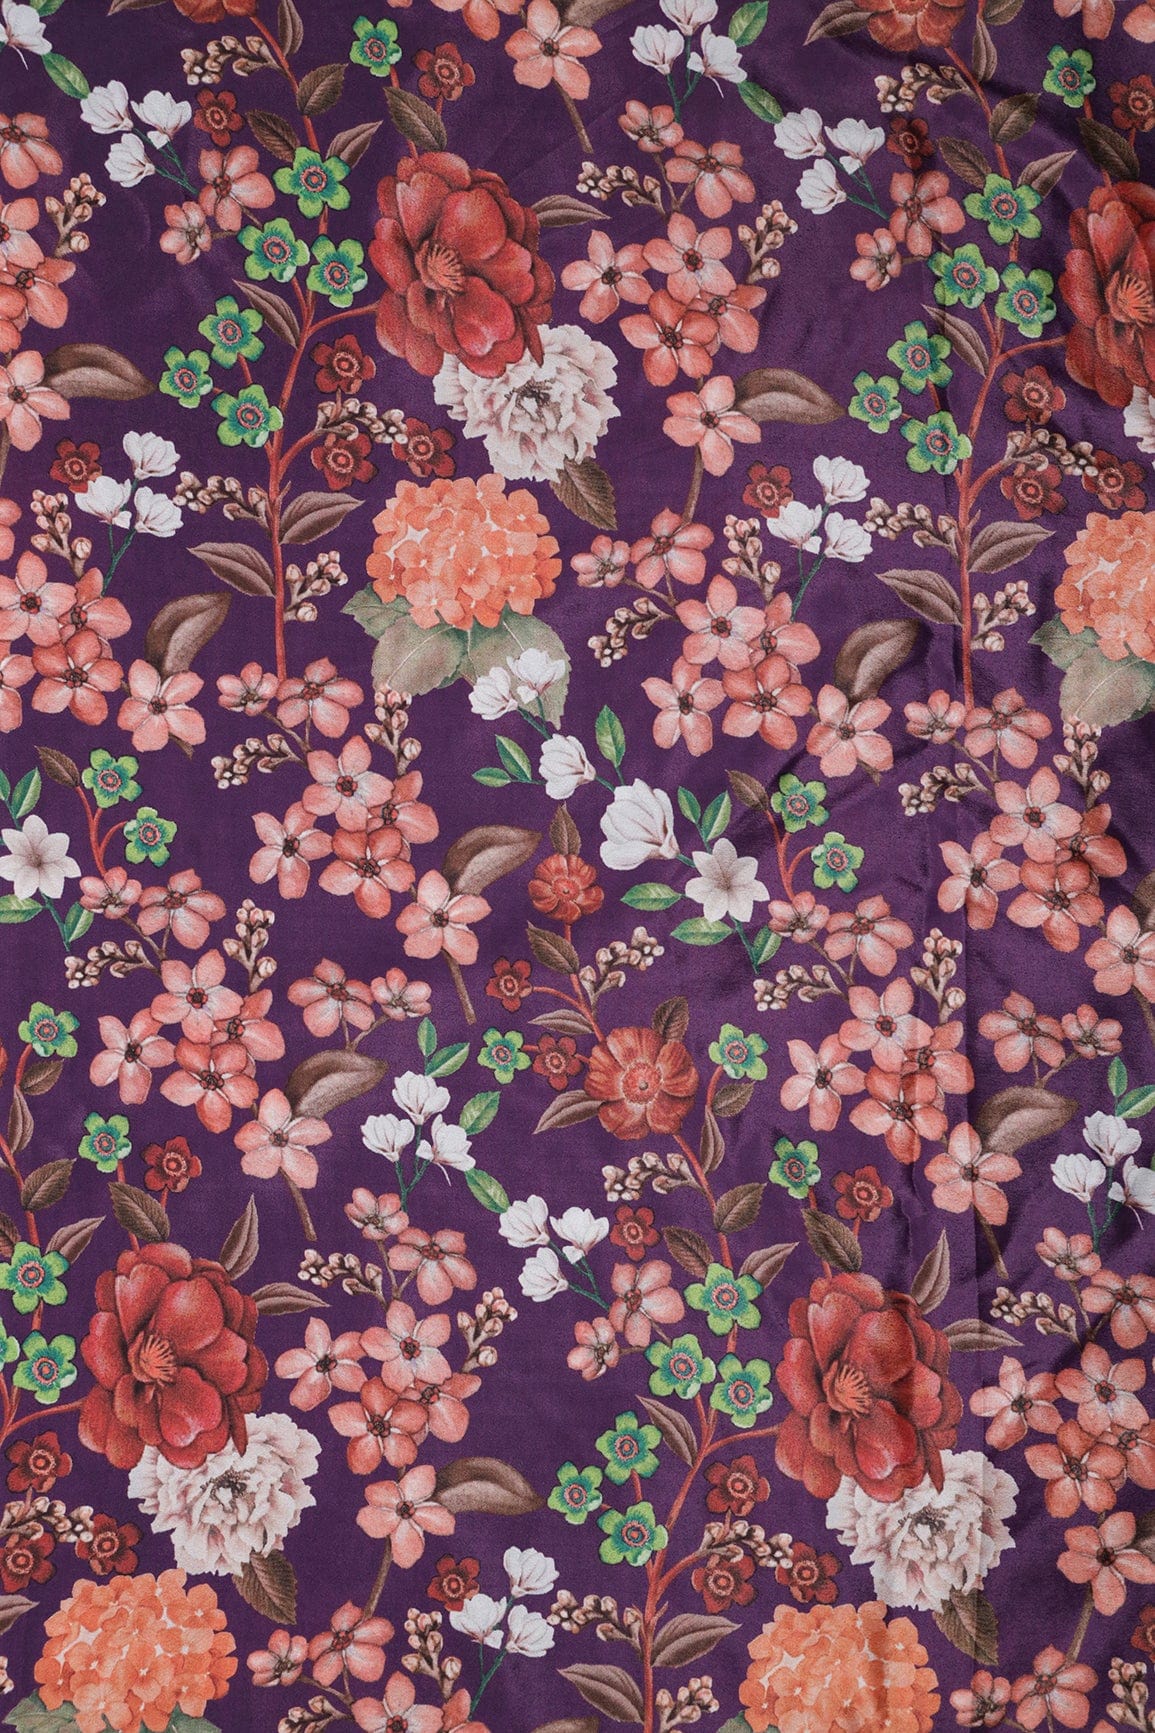 doeraa Prints Multi Color Floral Pattern Digital Print On Purple Malai Crepe Fabric